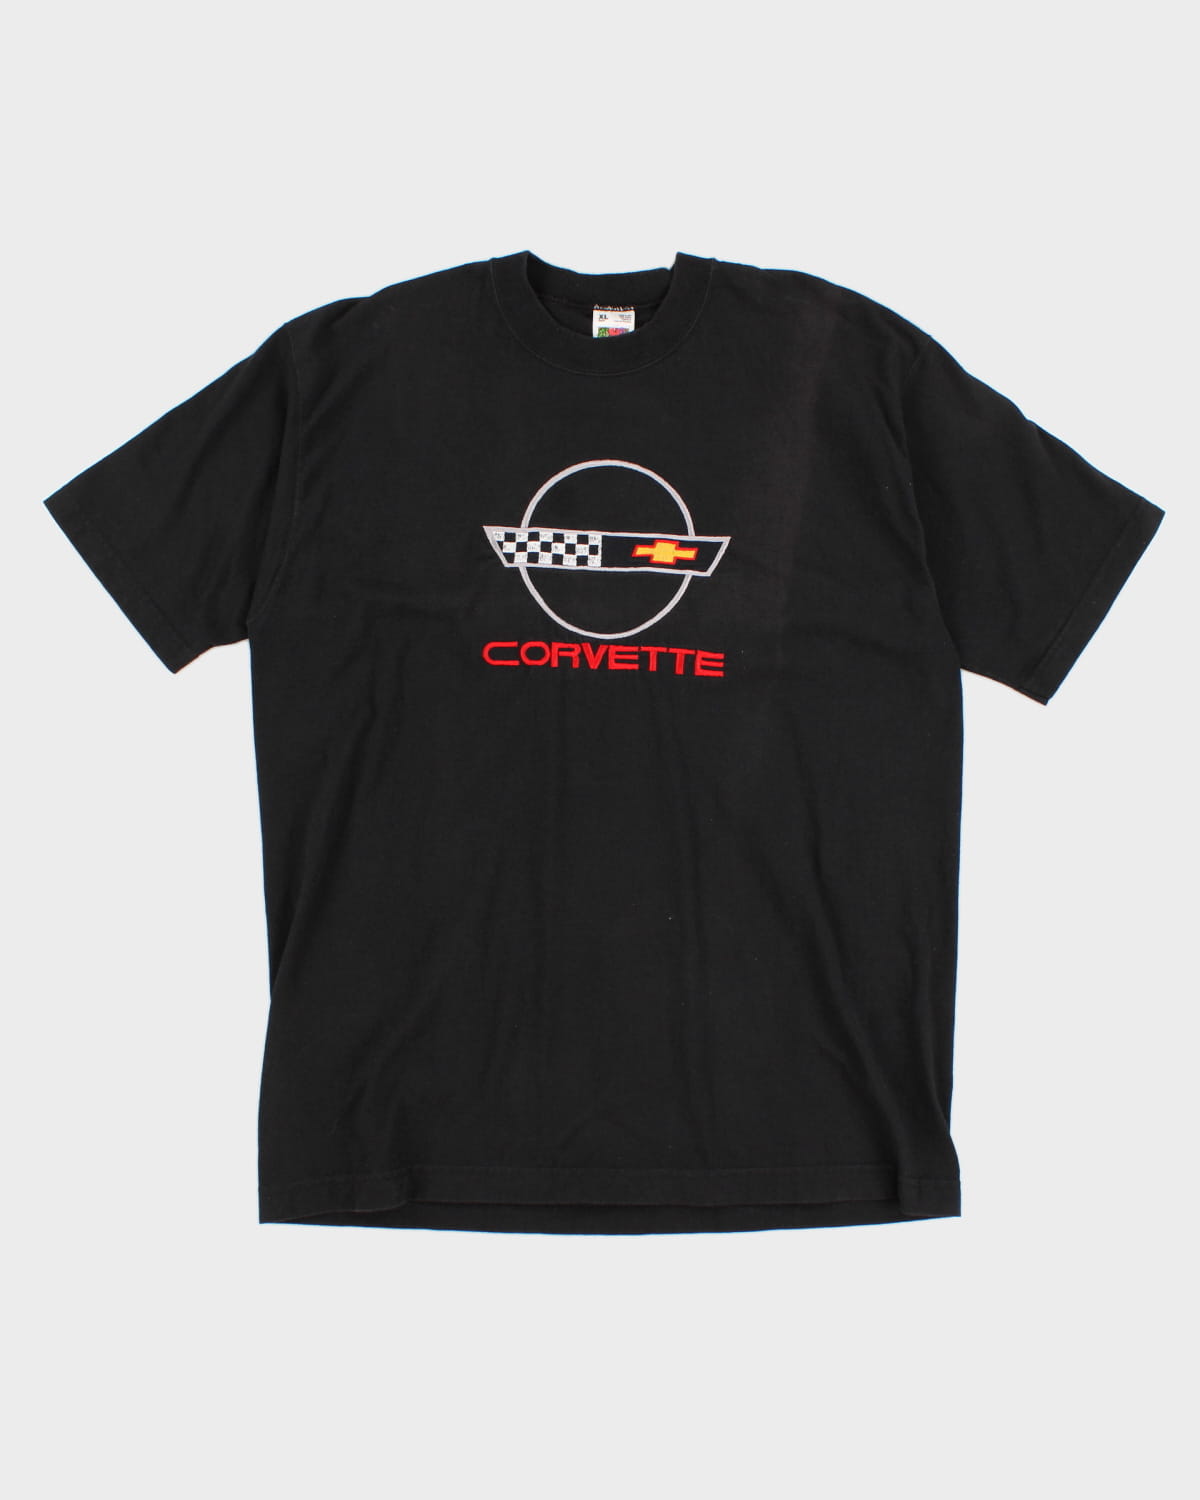 Chevy Corvette T-Shirt - XL